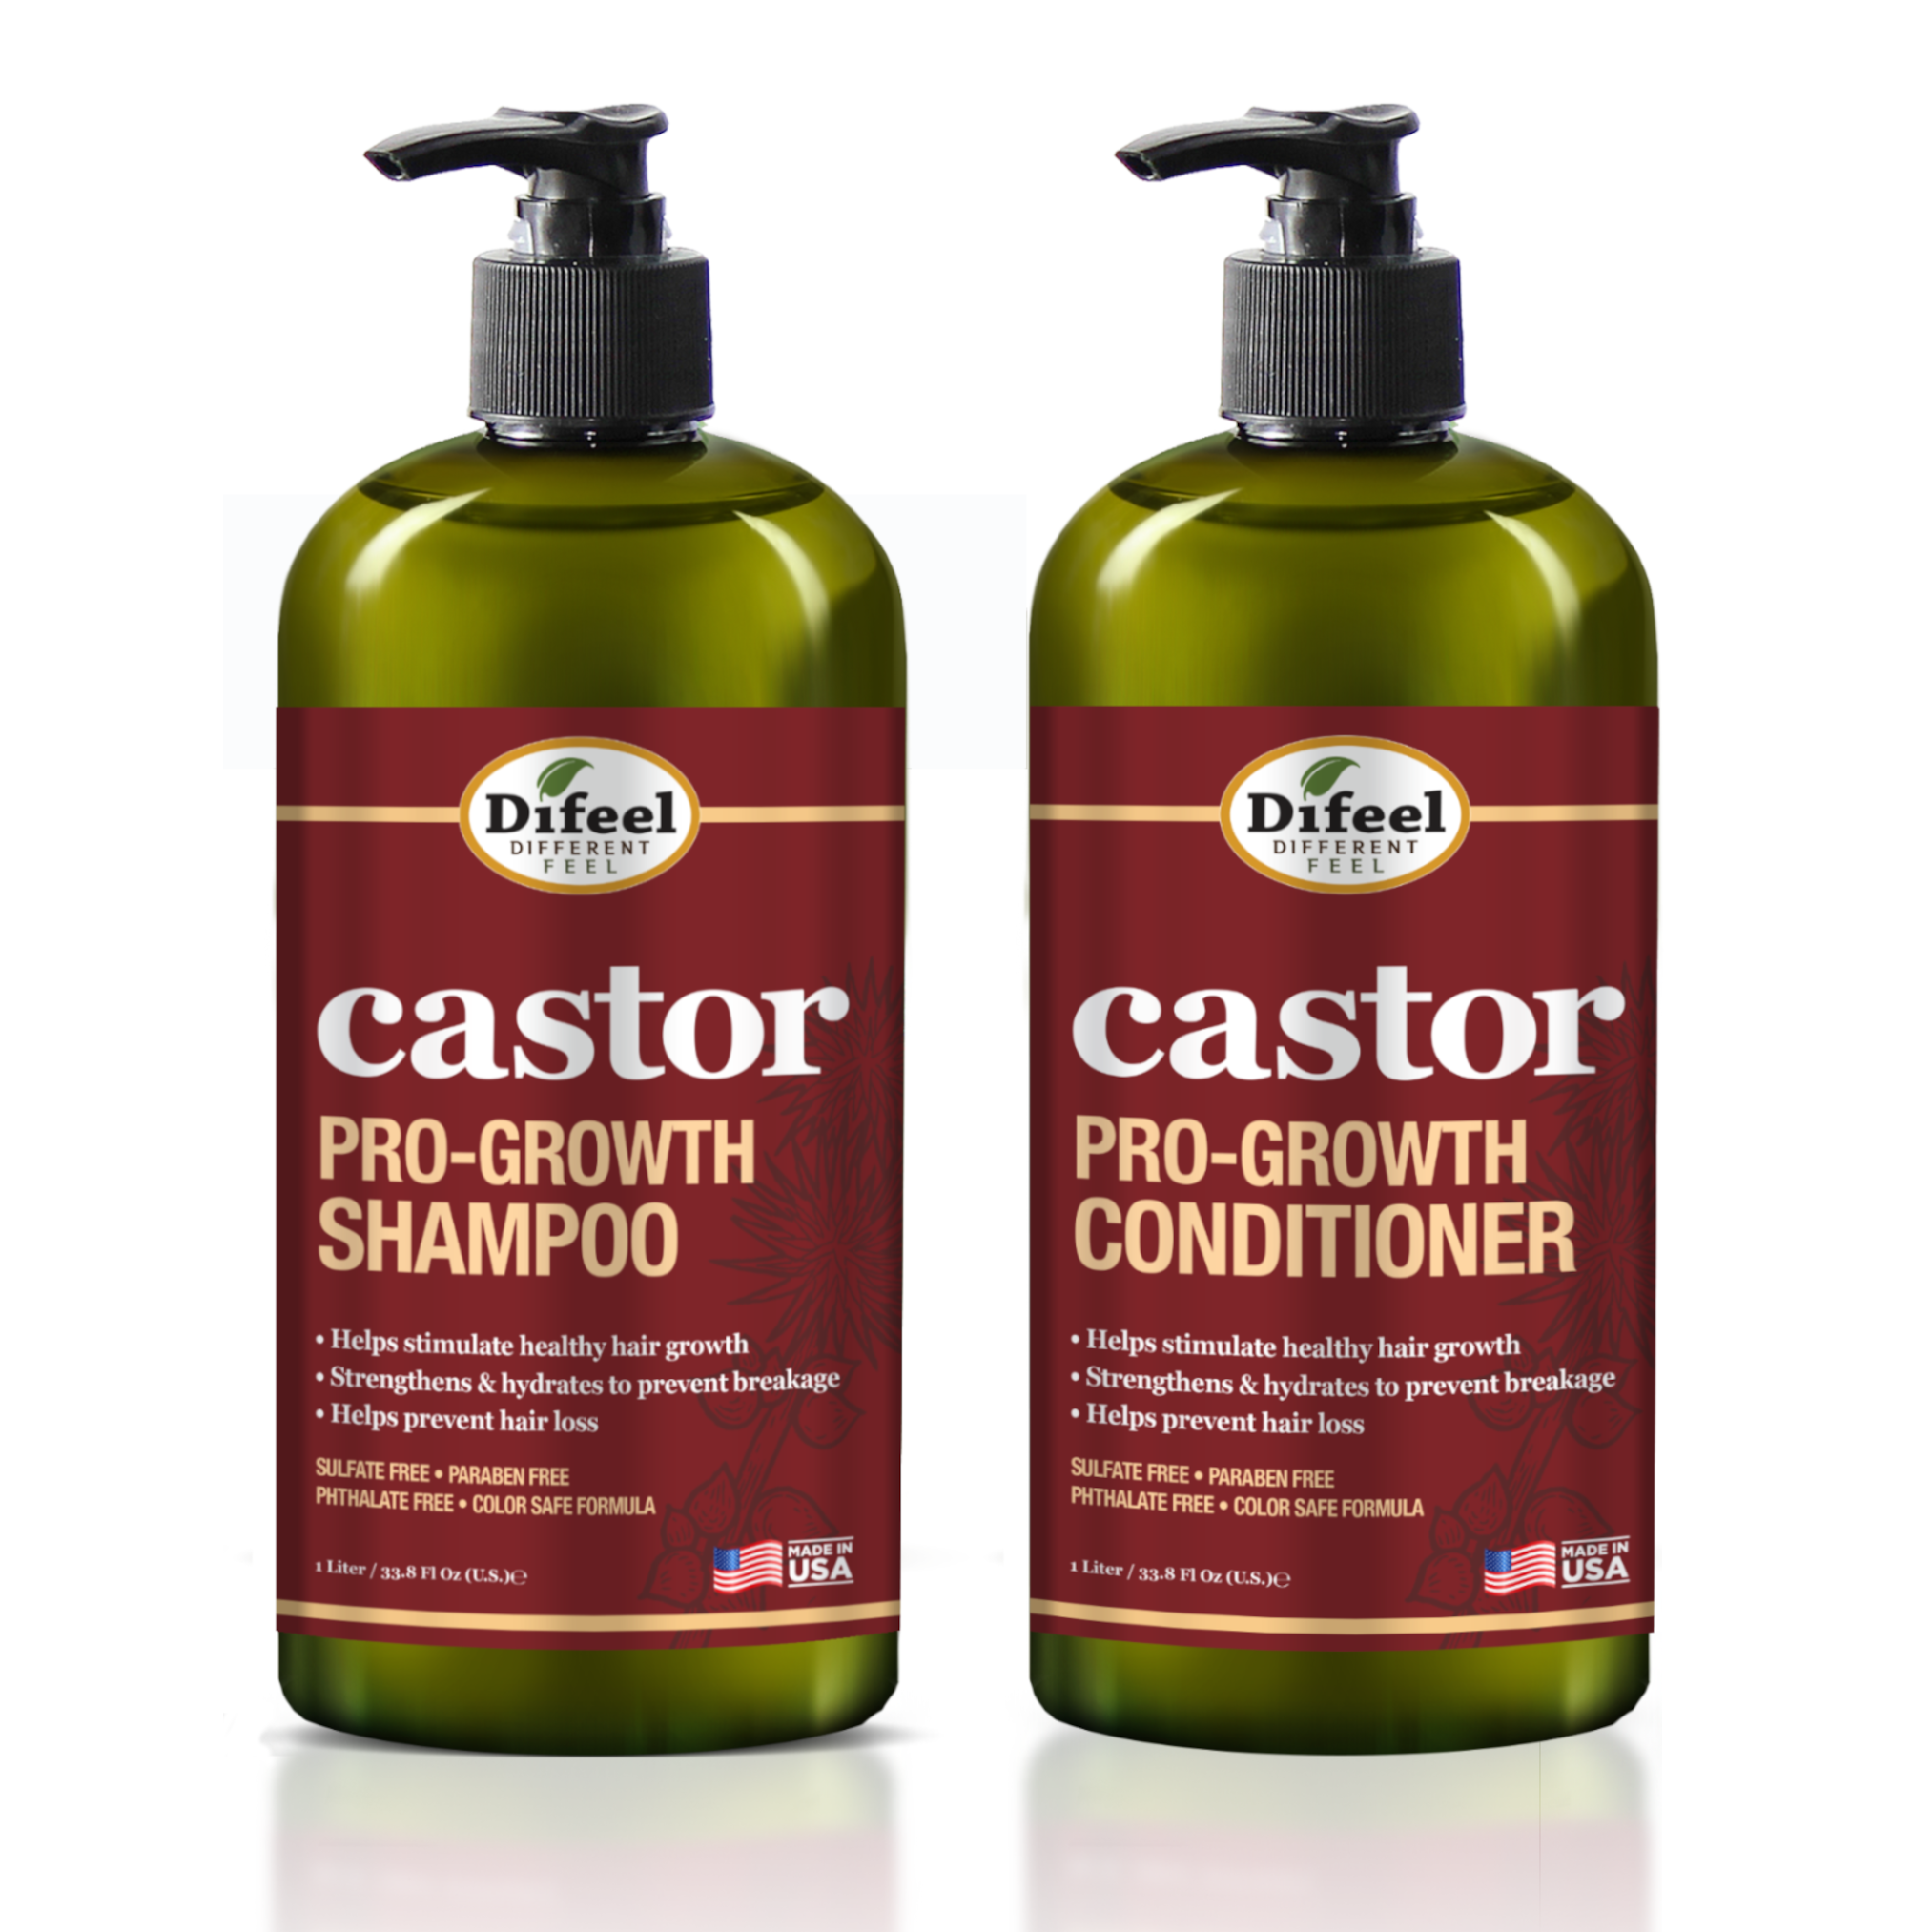 Difeel 2PC Castor Pro-Growth Shampoo & Conditoner Gift Box- Includes 33.8oz. Shampoo and Conditioner